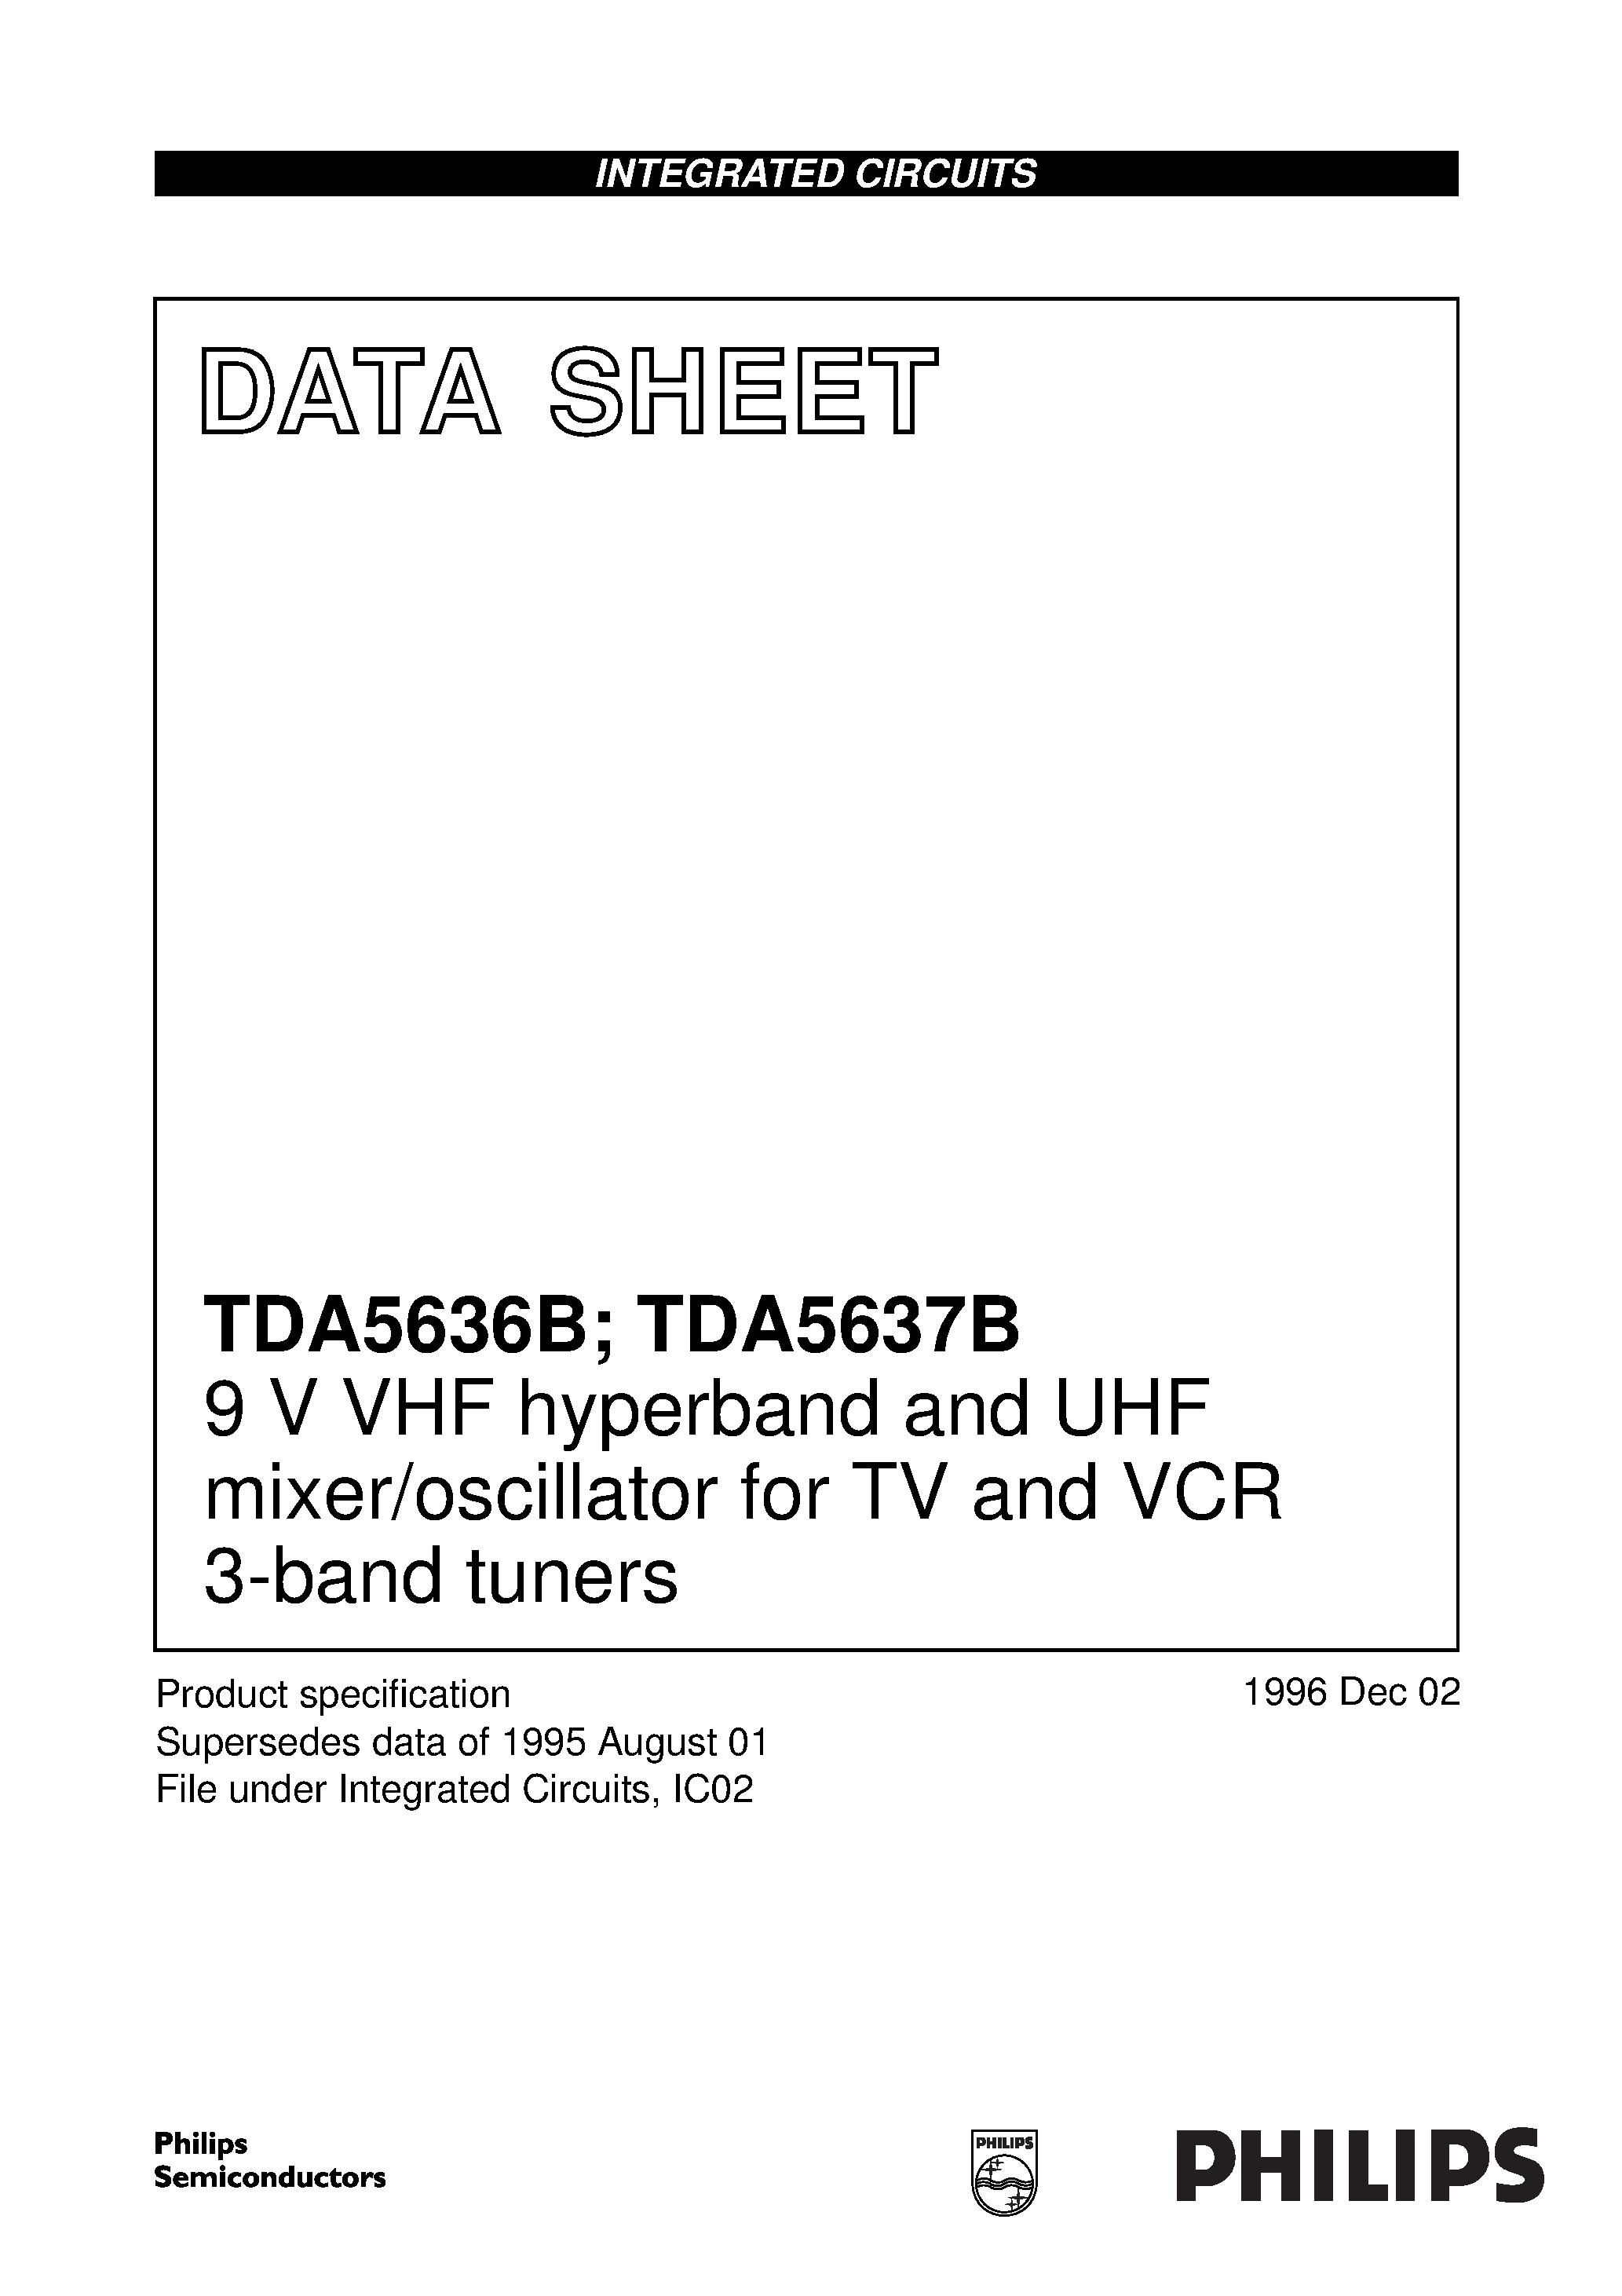 Datasheet TDA5636B - 9 V VHF hyperband and UHF mixer/oscillator for TV and VCR 3-band tuners page 1